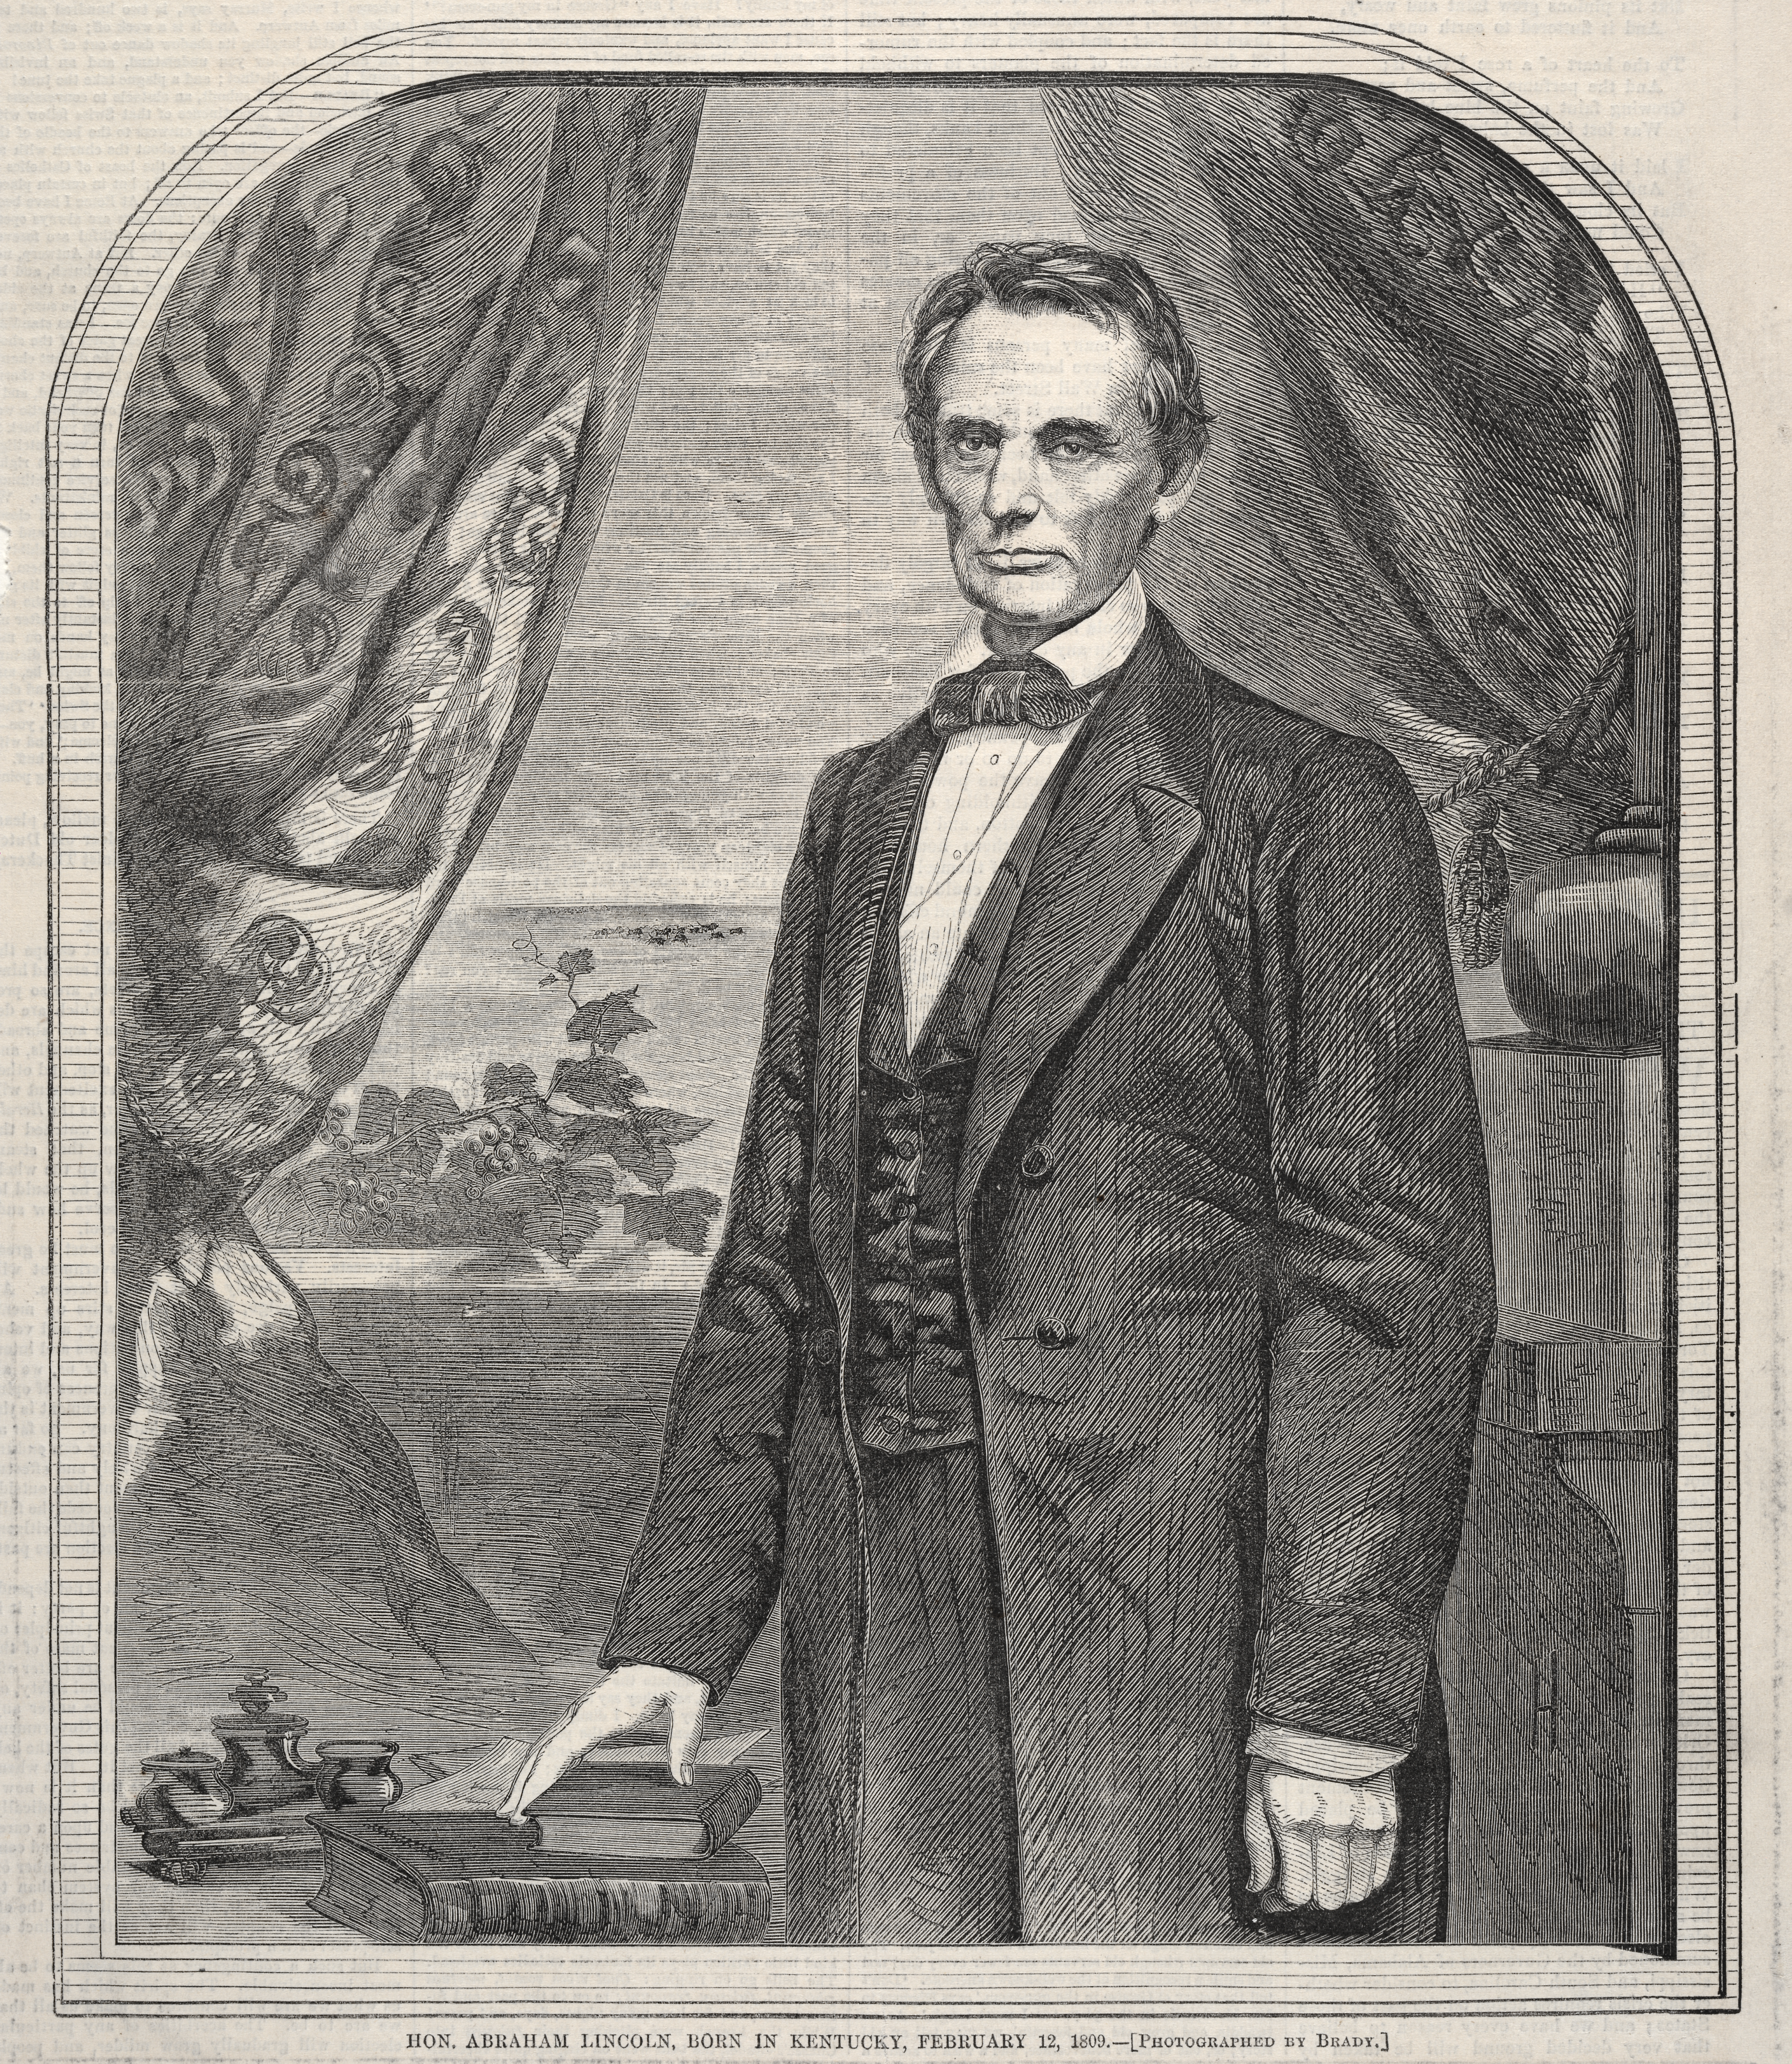 Abraham Lincoln - February 12, 1809